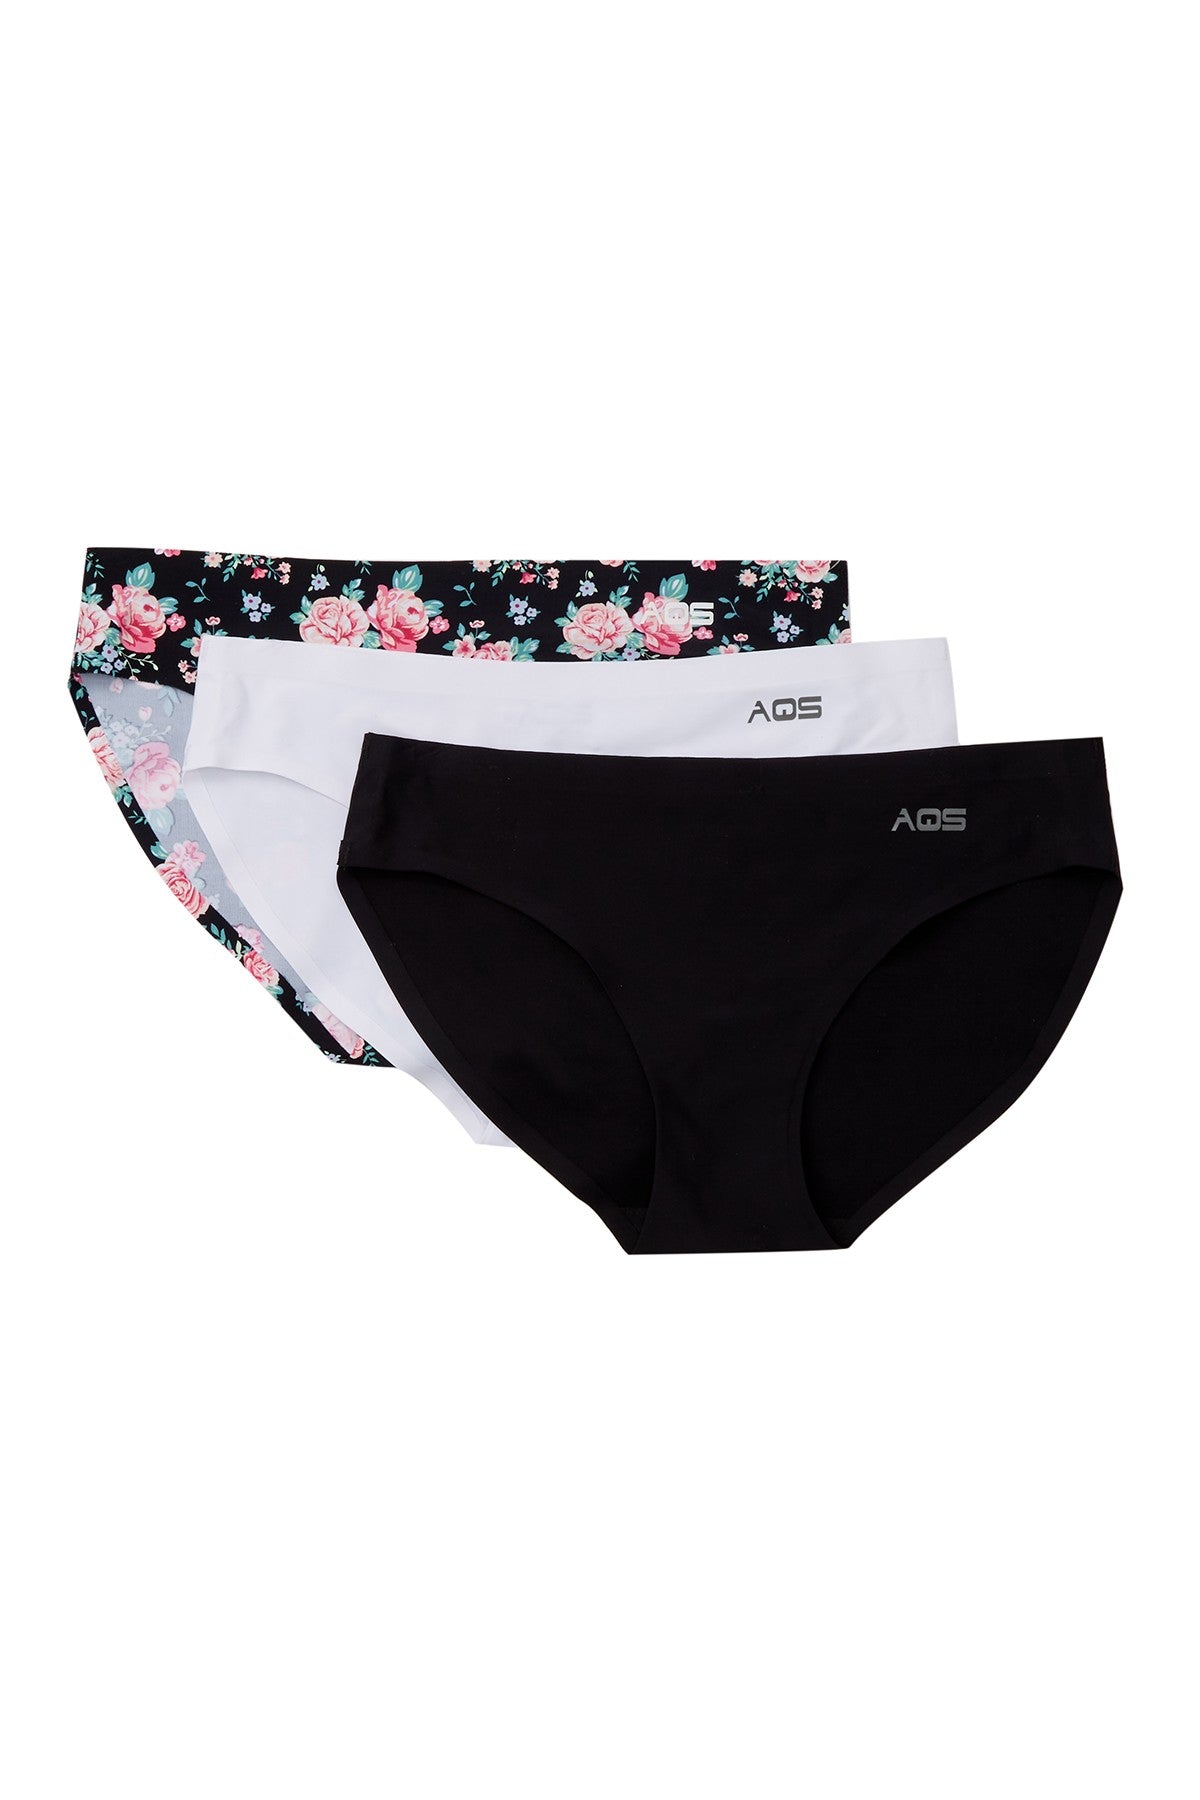 AQS 3Pk Flowers Laser Cut Bikini Brief